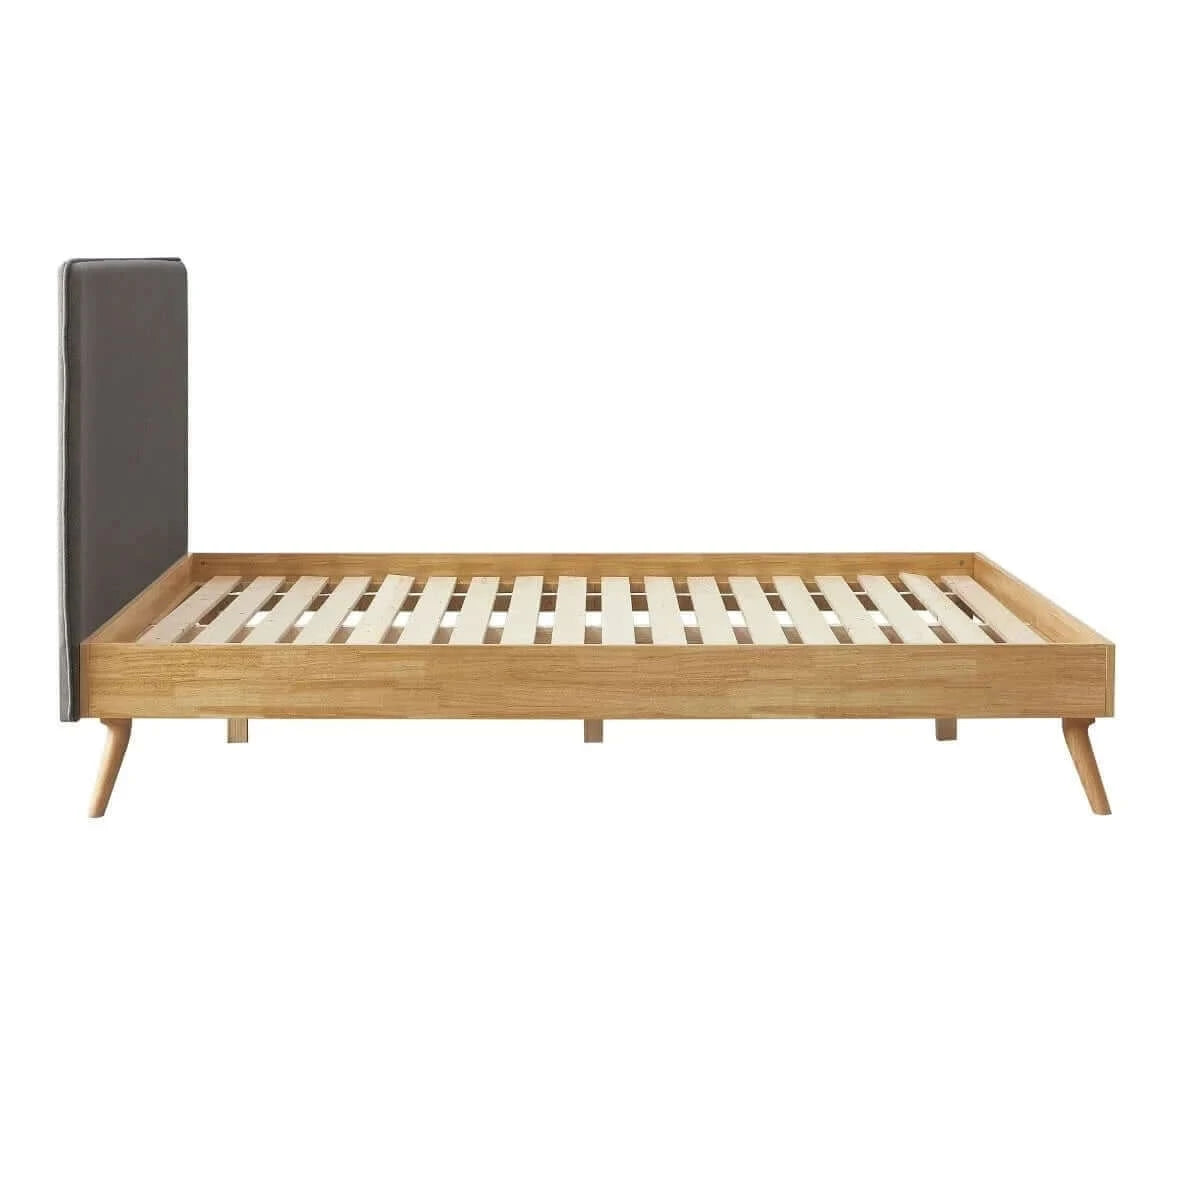 Buy natural oak ensemble bed frame wooden slat fabric headboard double - upinteriors-Upinteriors